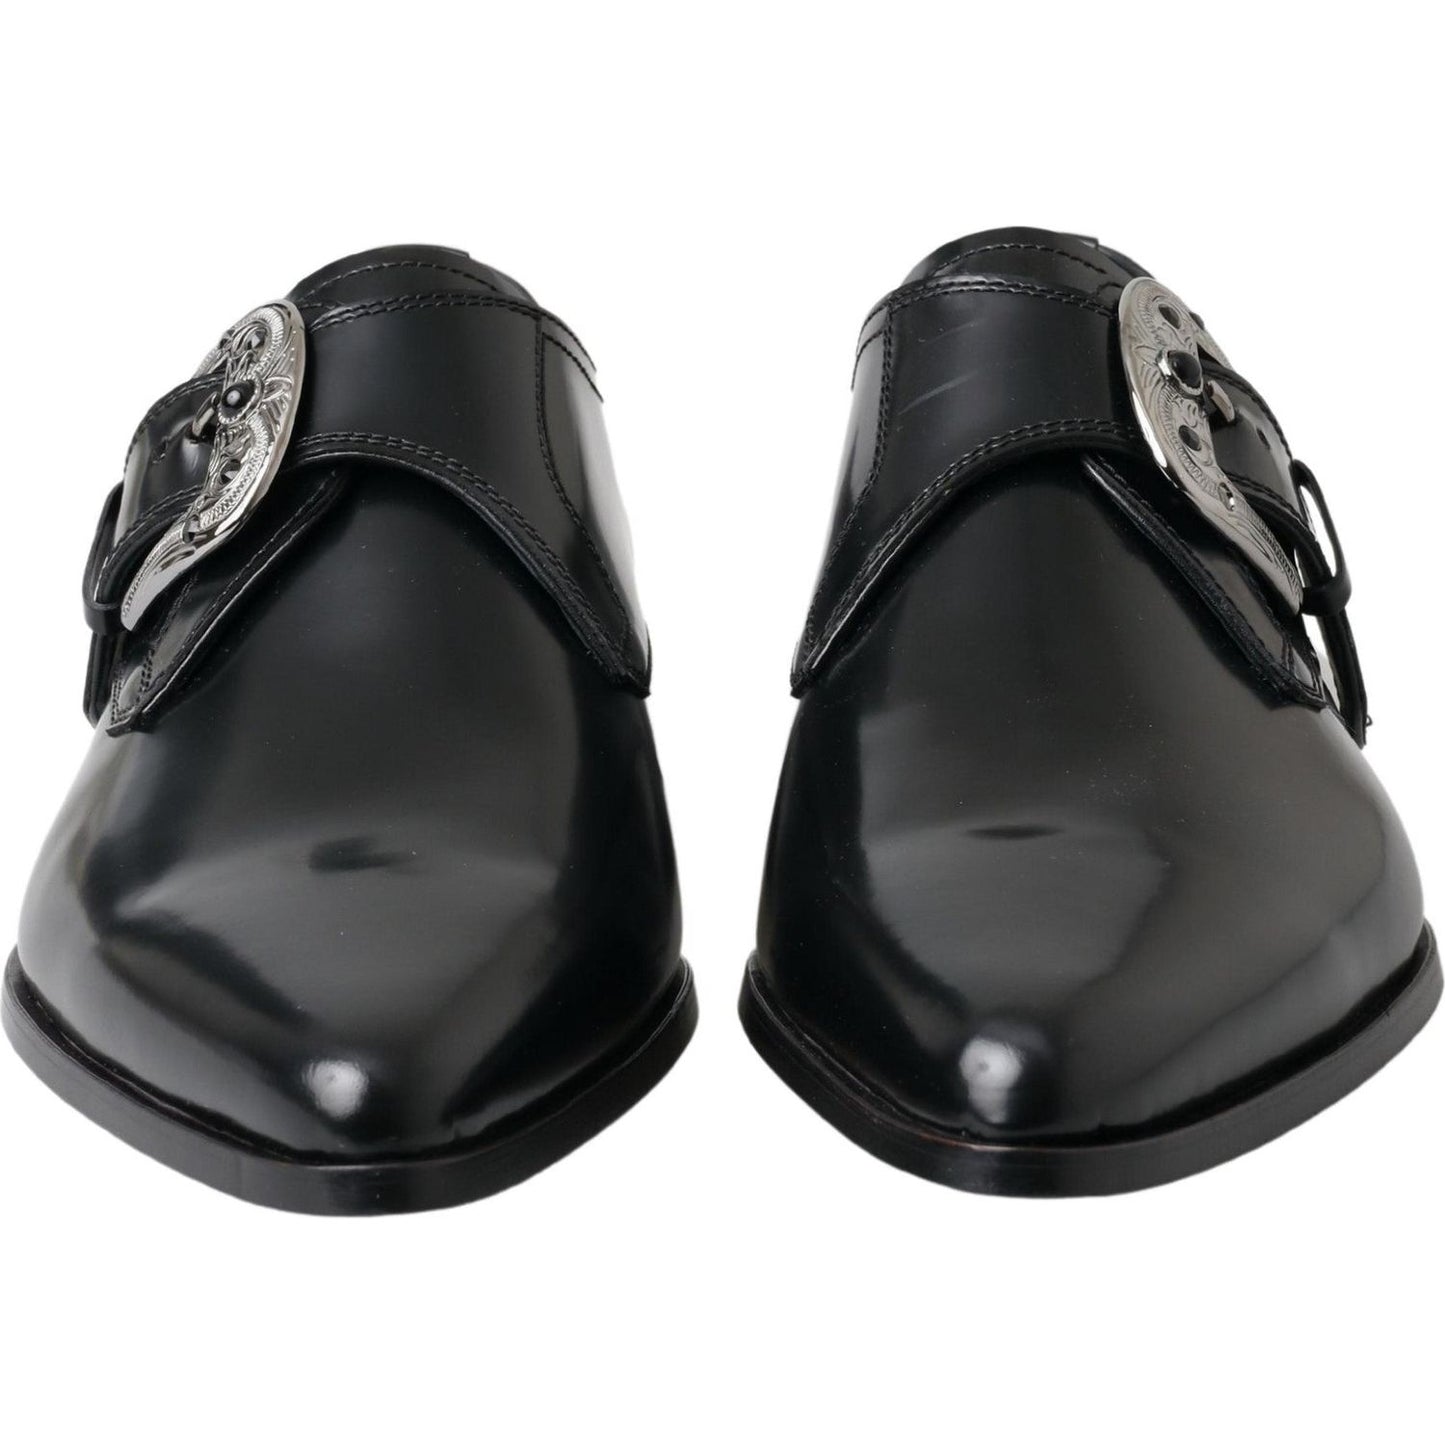 Dolce & Gabbana Elegant Black Leather Monk Strap Shoes black-leather-monk-strap-dress-formal-shoes